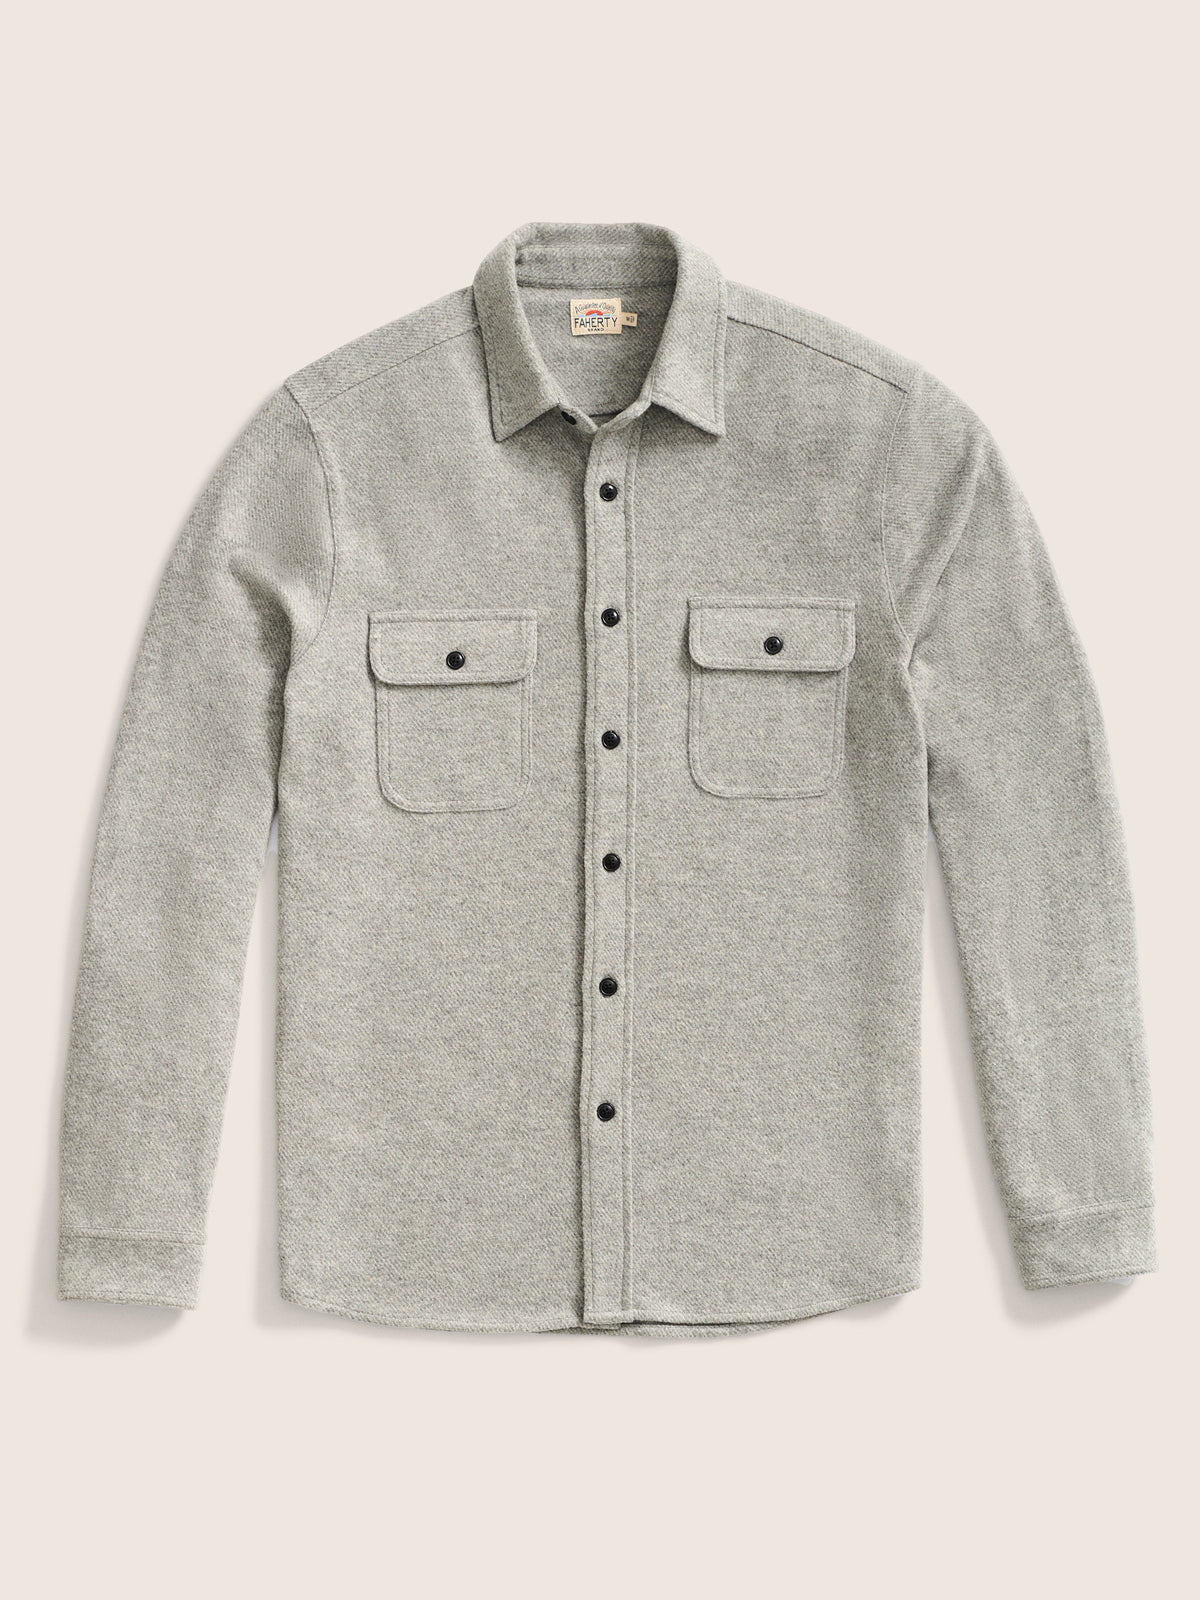 Legend™ Sweater Shirt - Fossil Grey Twill